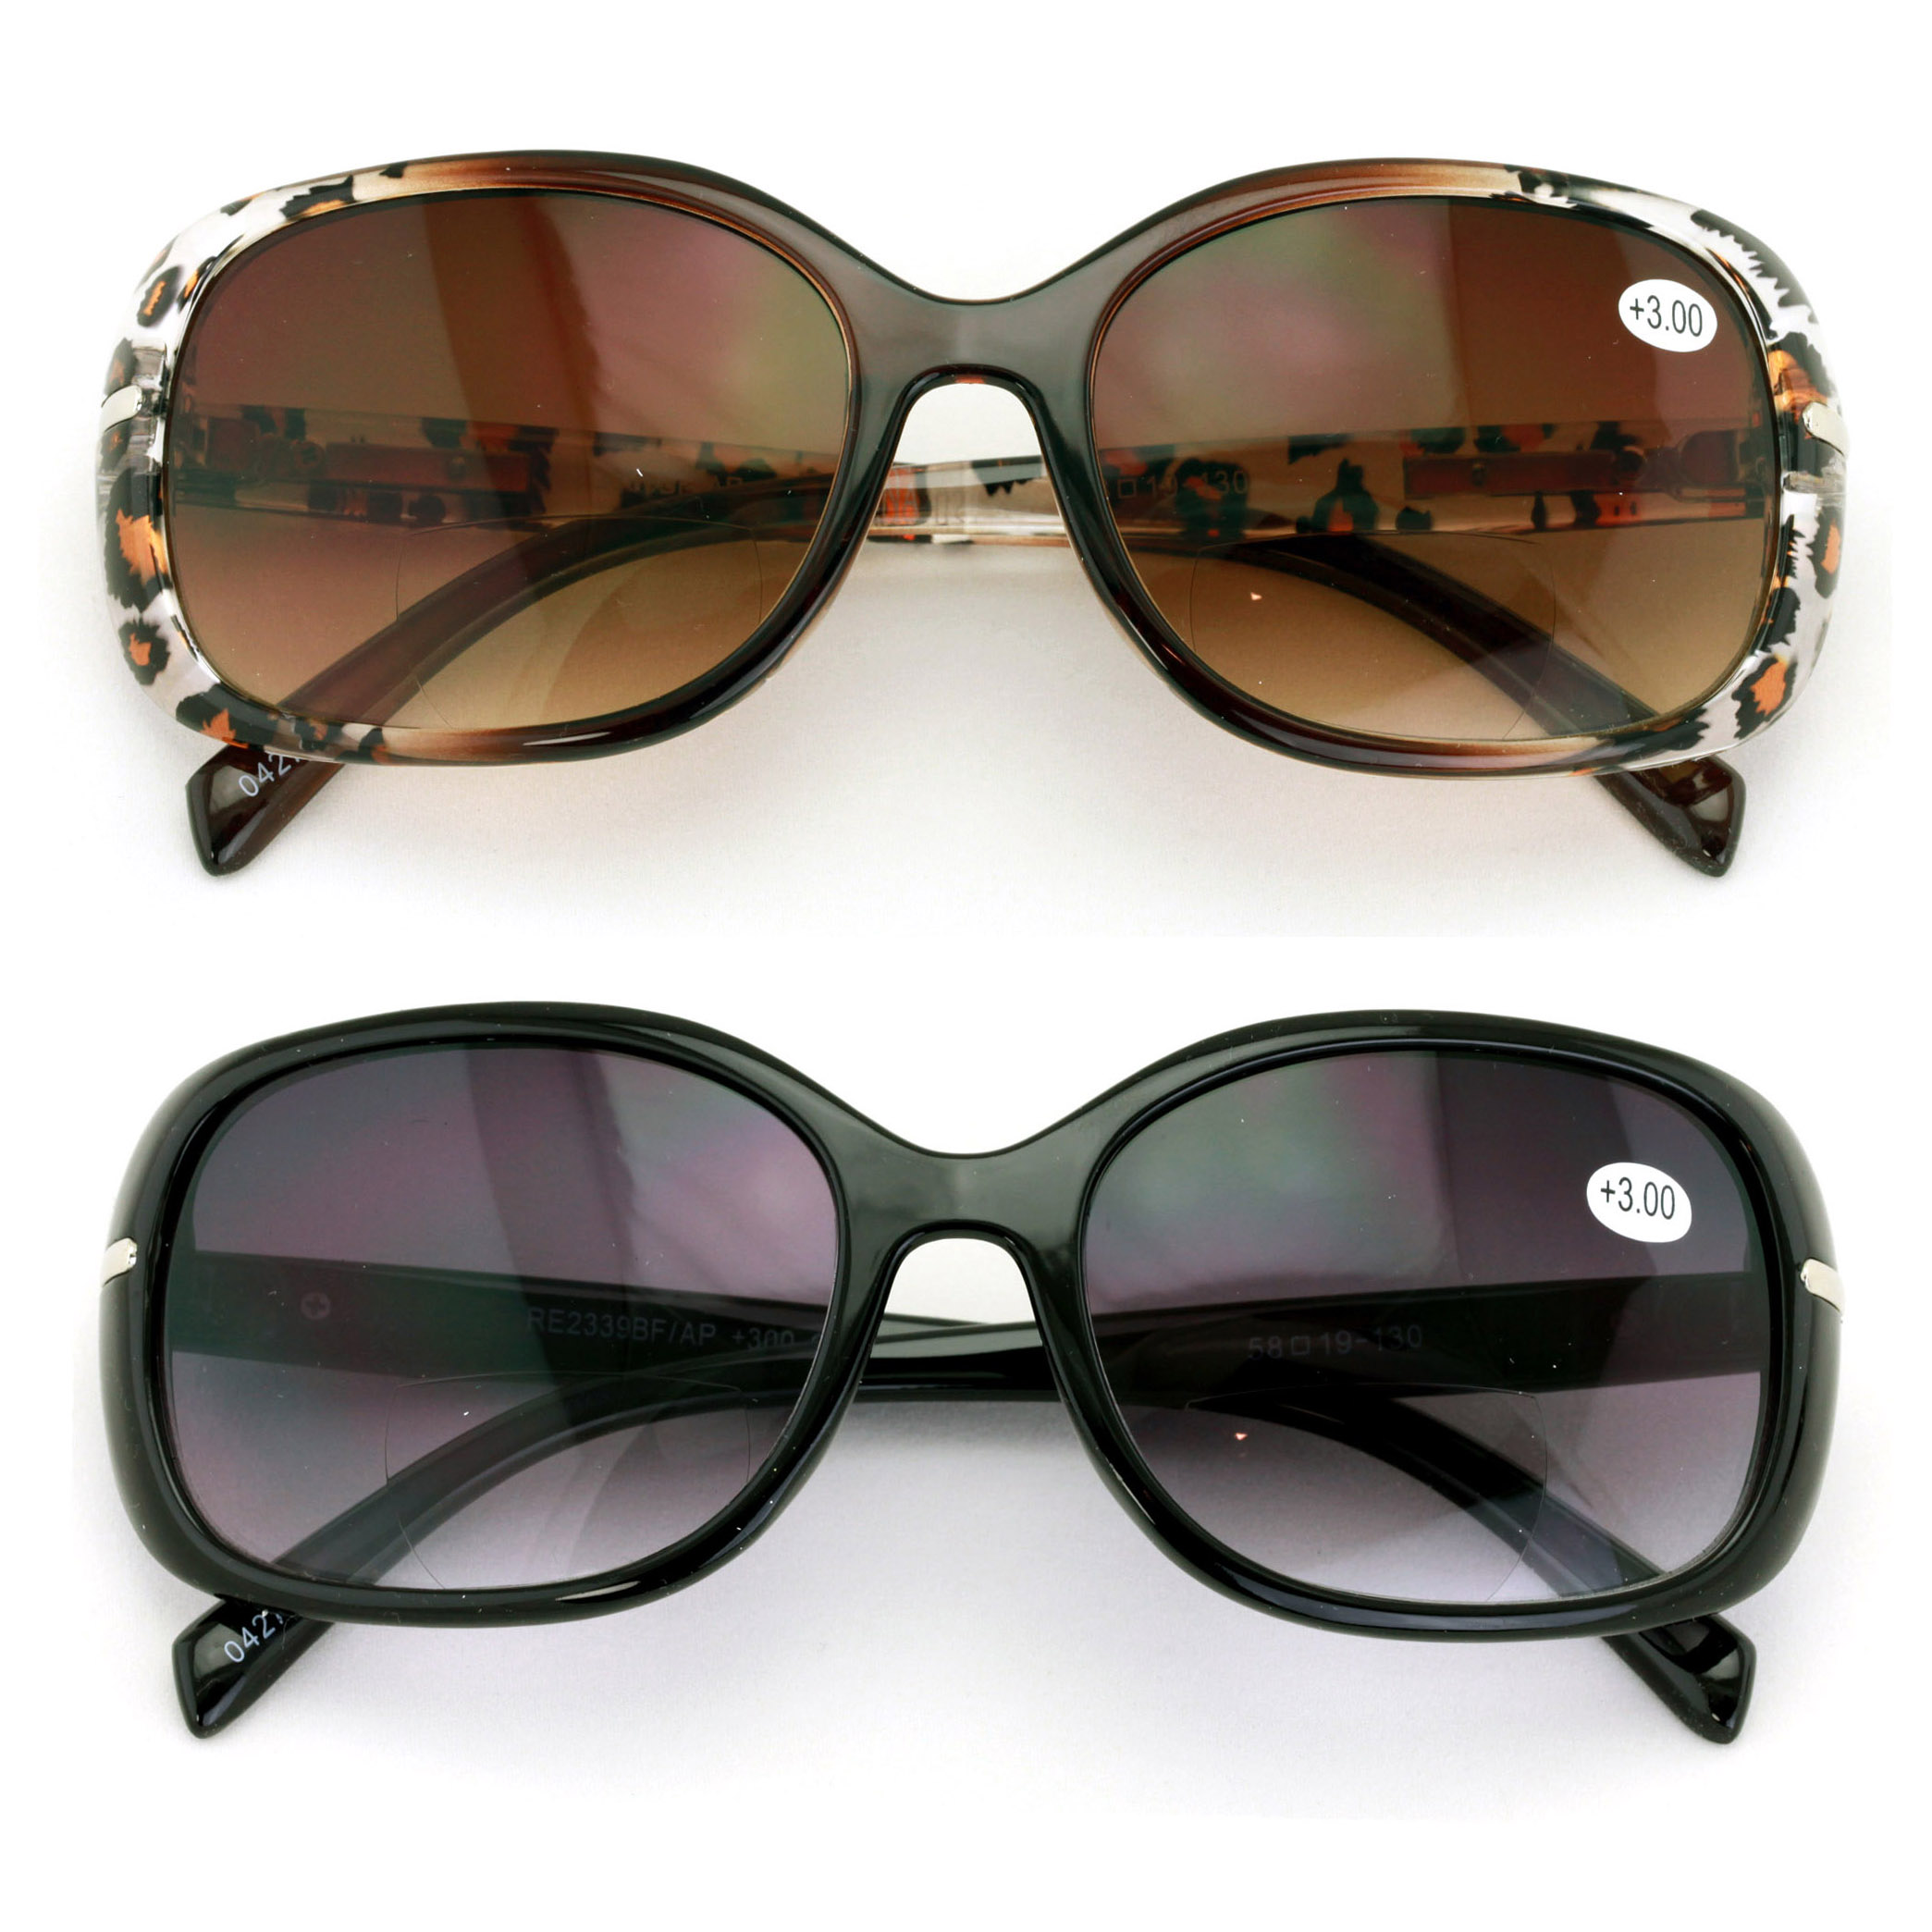 2 Pairs Women S Bifocals Reading Sunglasses Reader Glasses Vintage Outdoor Black And Leopard